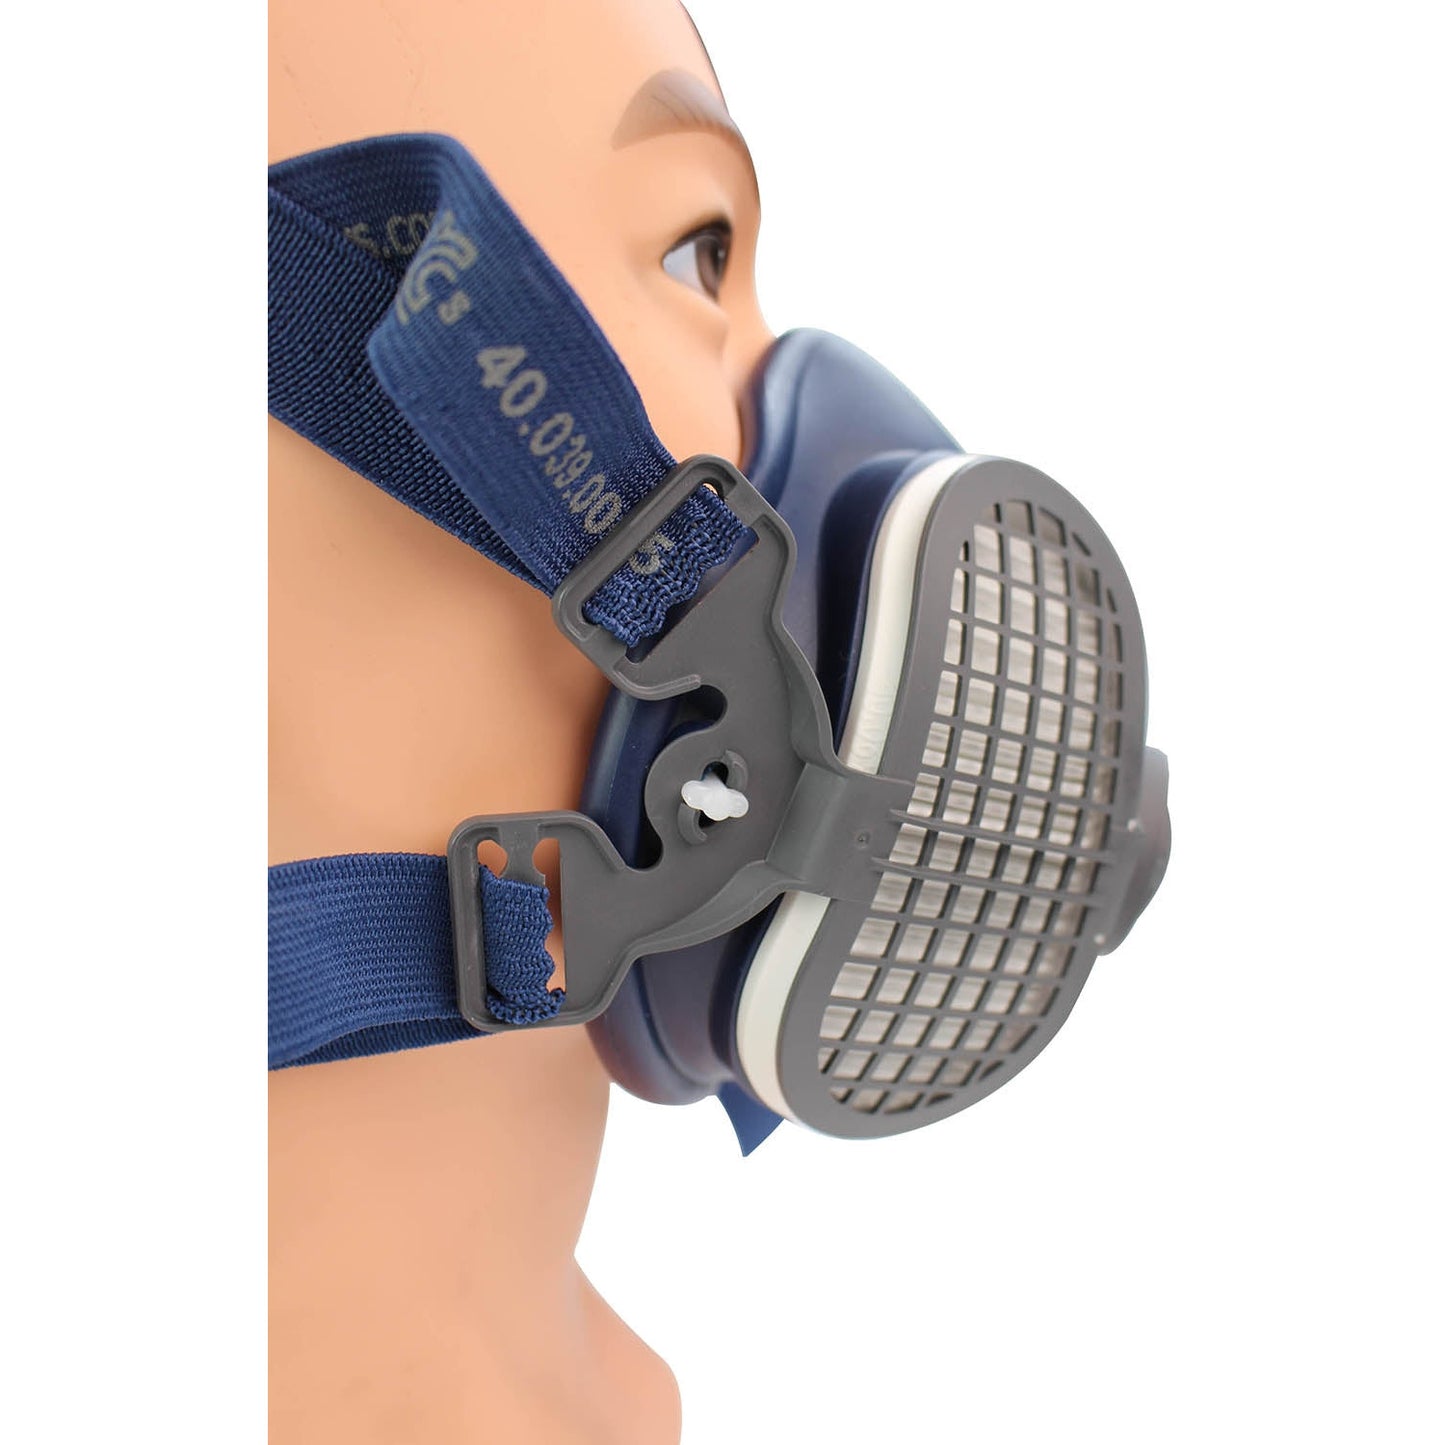 GVS Elipse P3 Half Mask Respirator x 1 (Small-Medium)